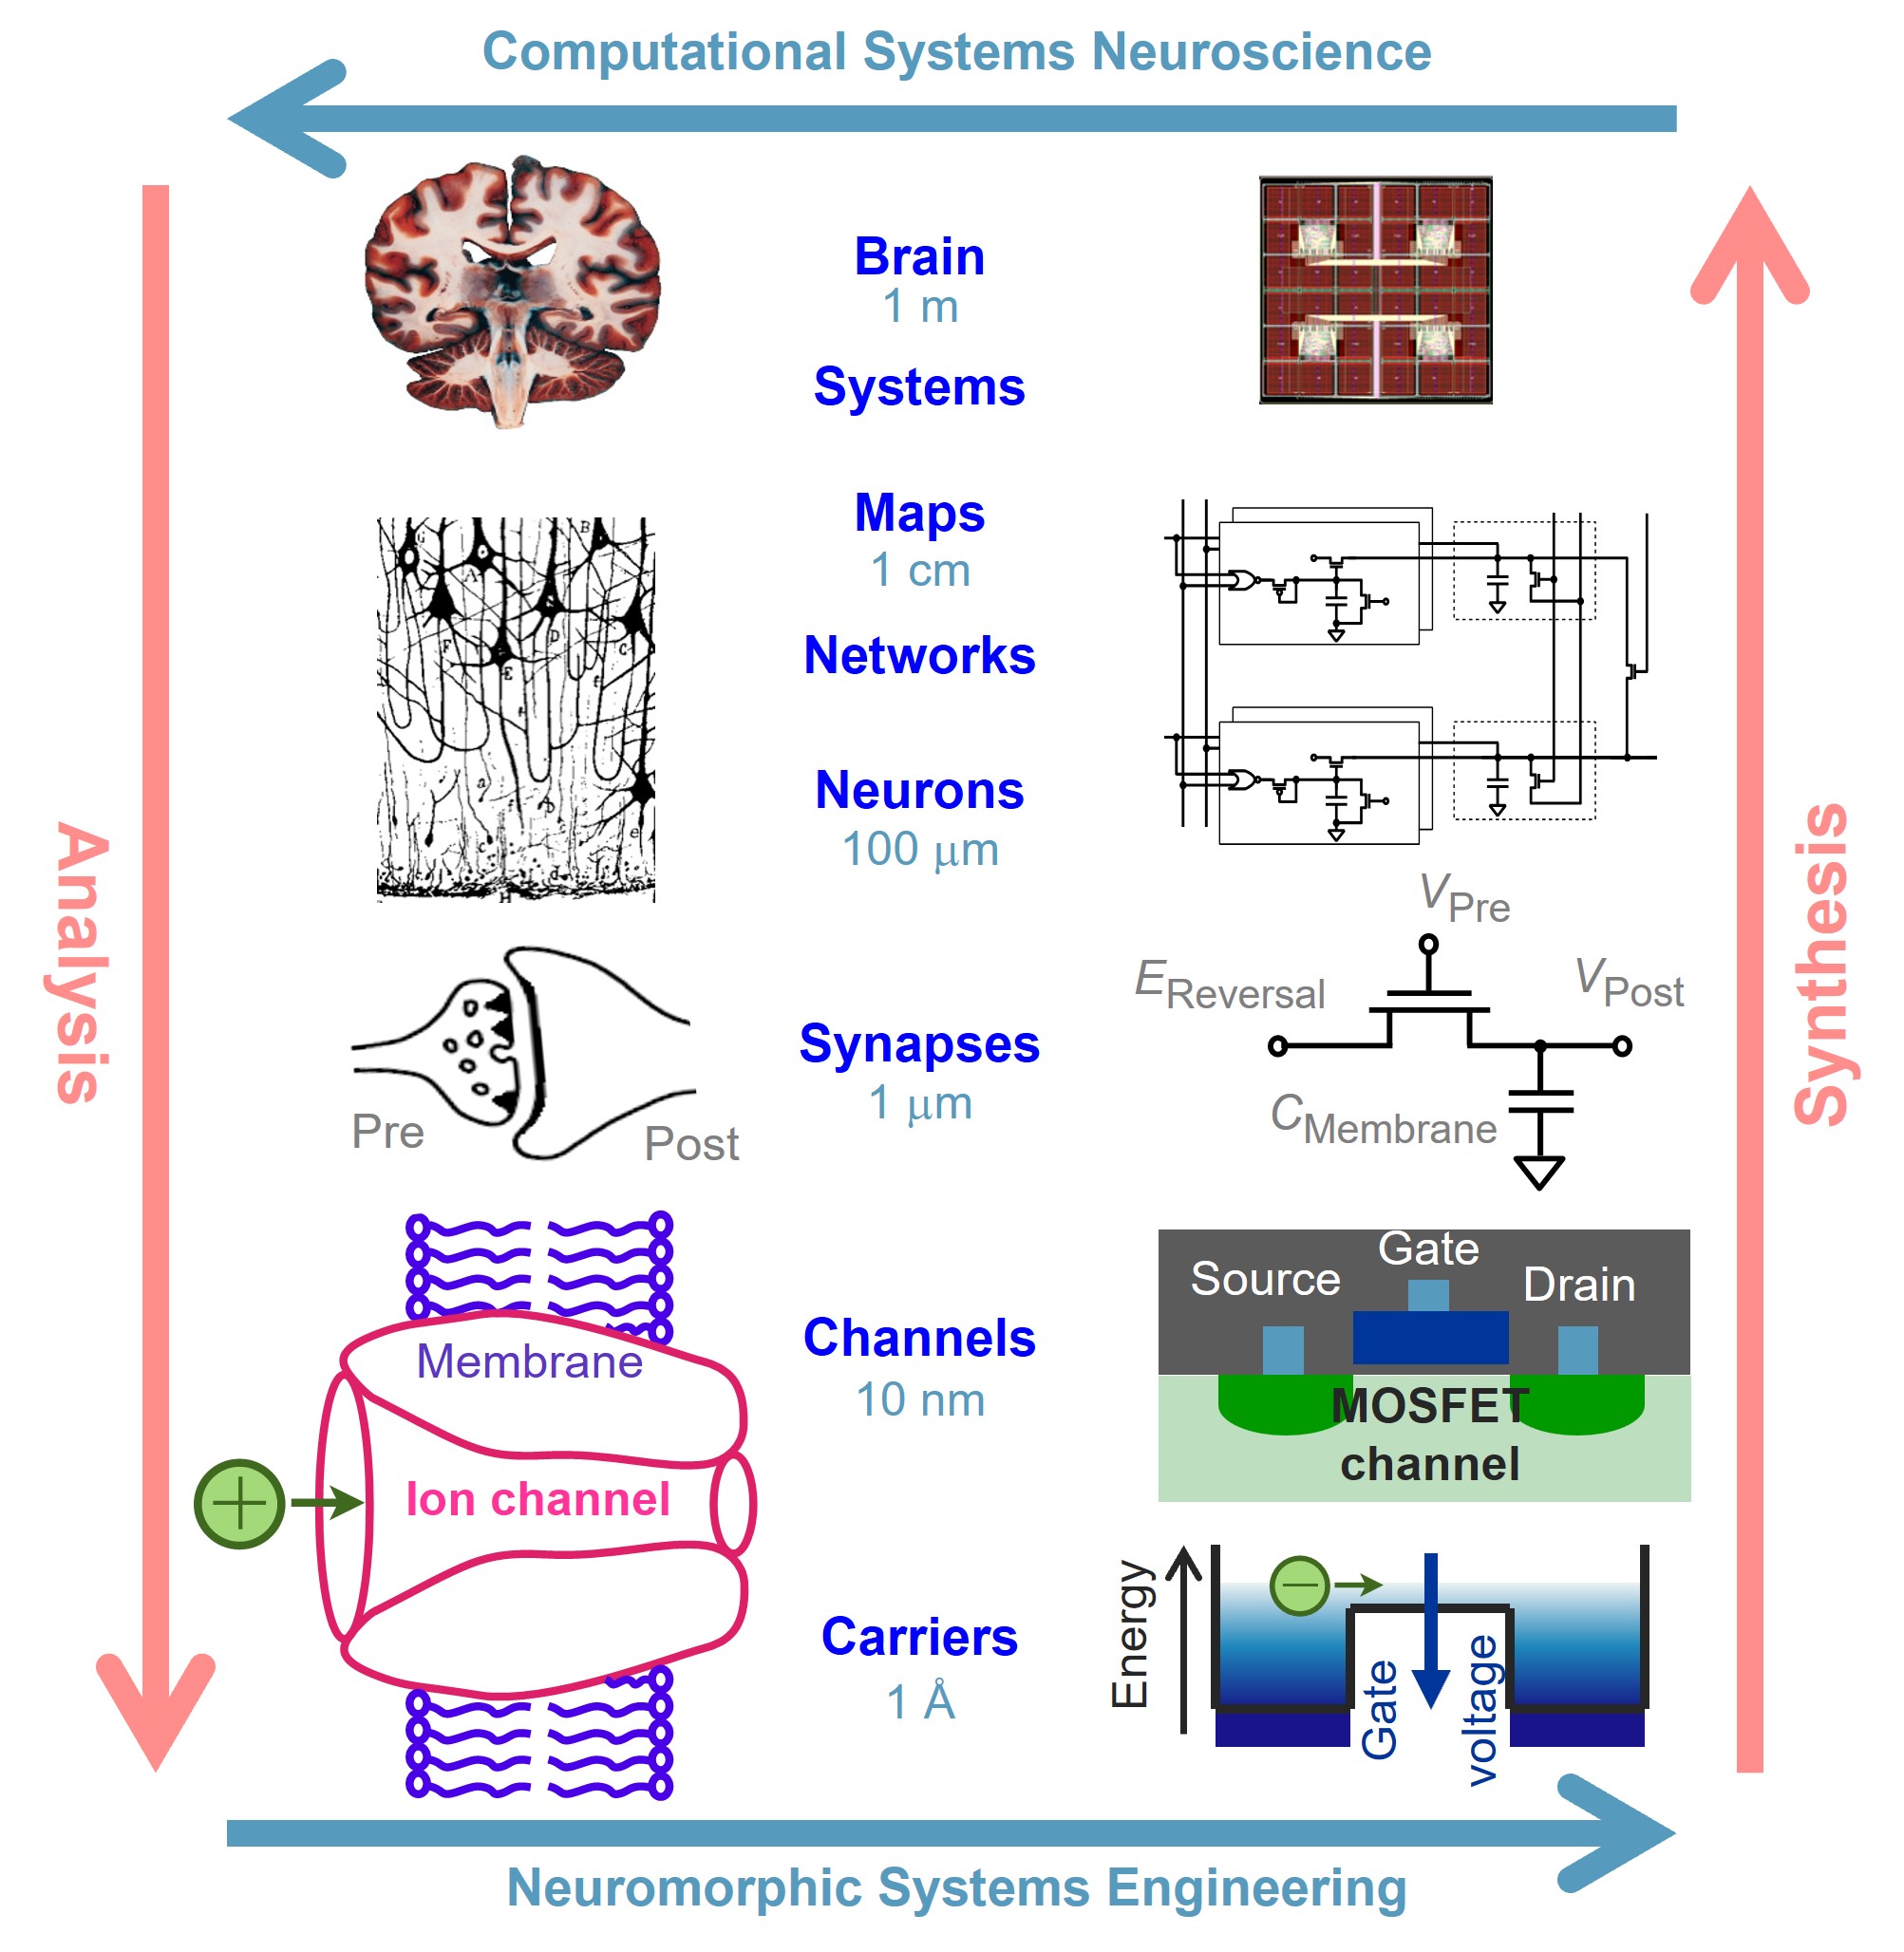 Neuromorphic Engineering based on Analysis and Synthesis Feedback Loop